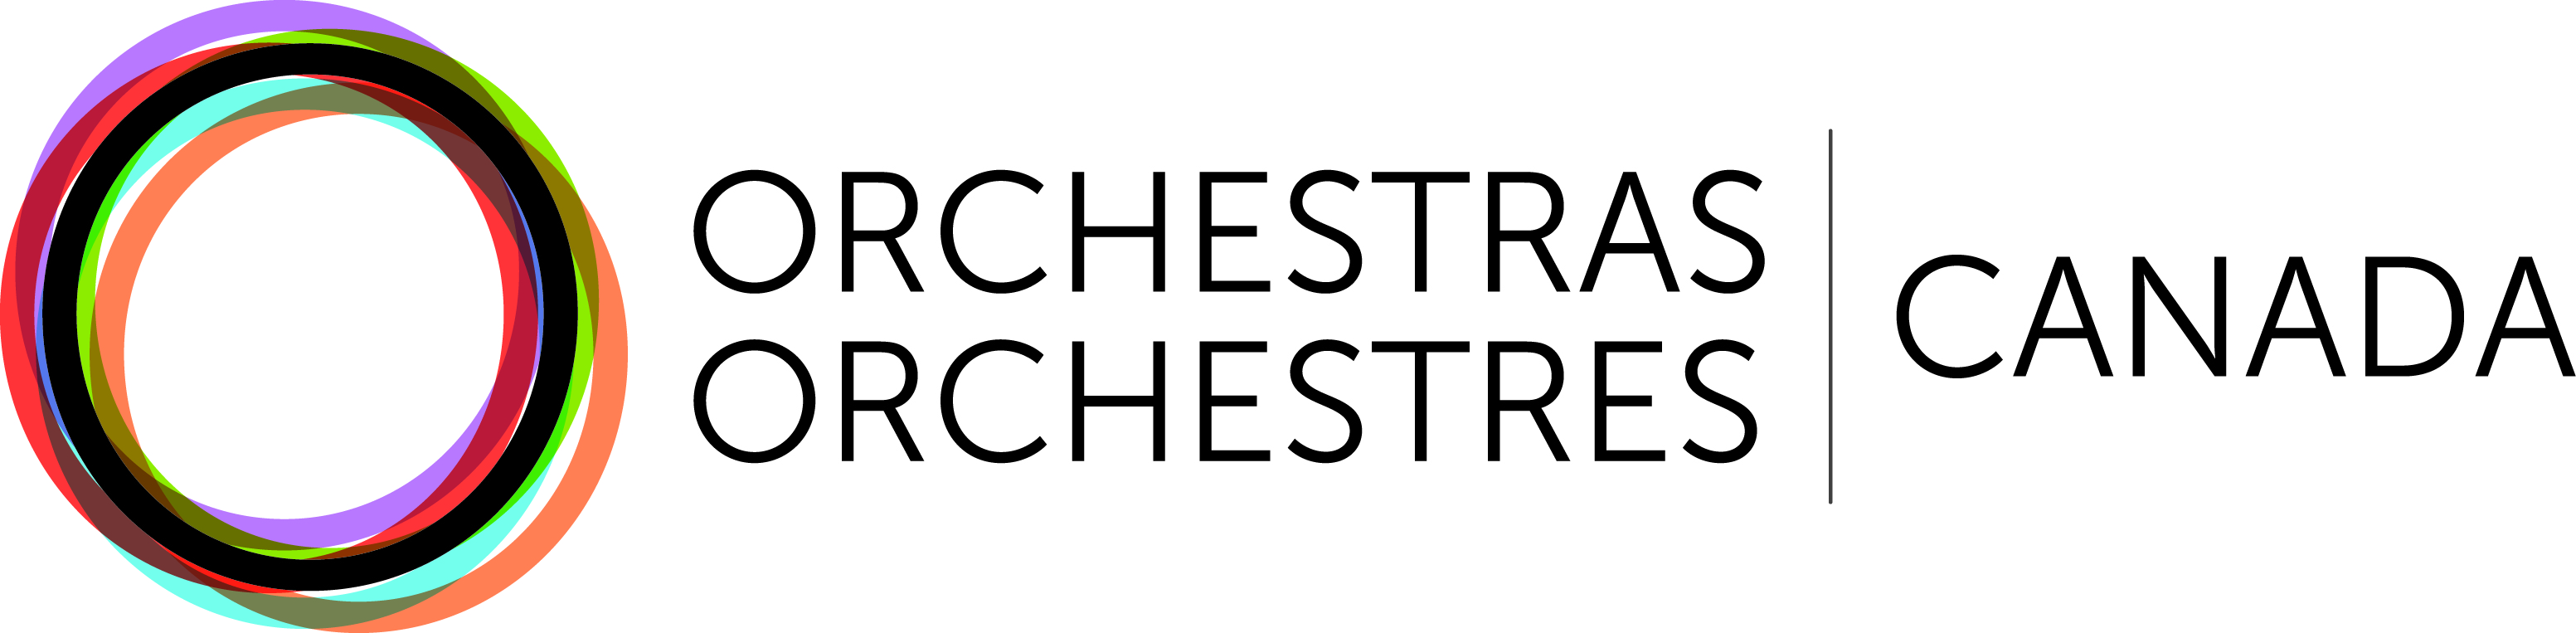 ORCHESTRAS CANADA logo